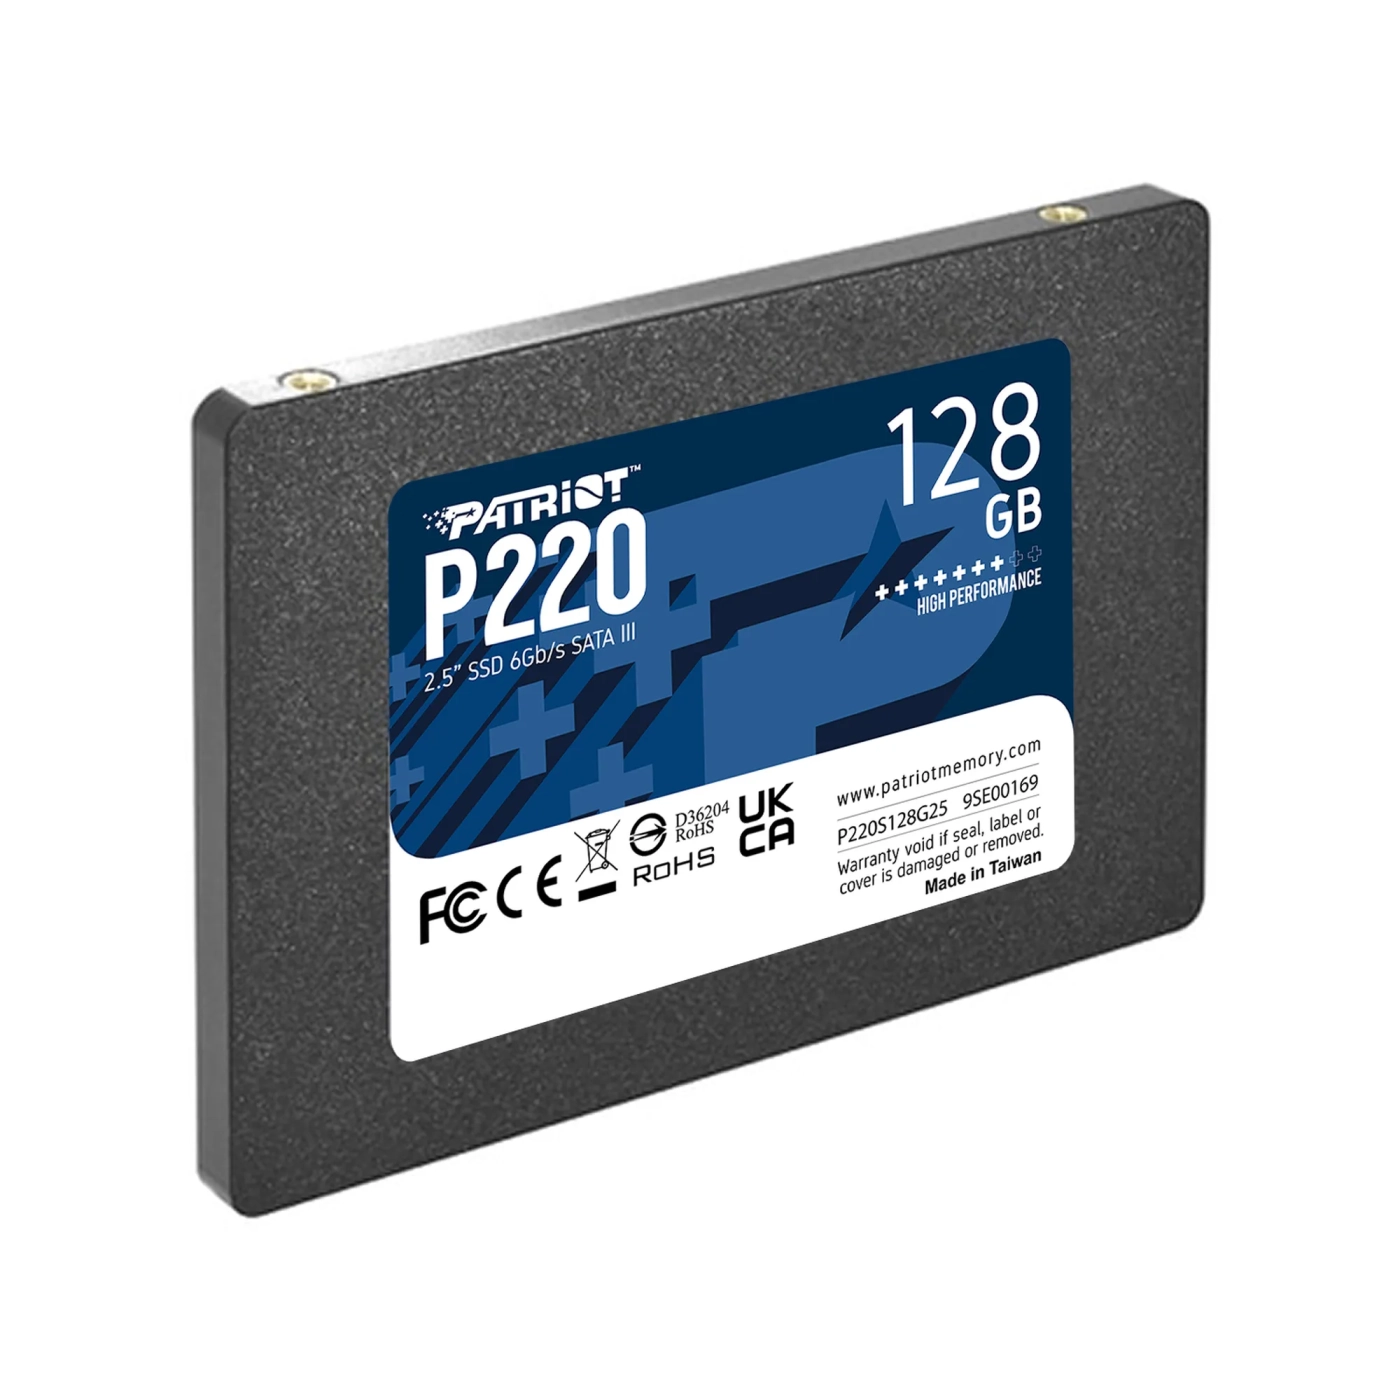 Купити SSD диск Patriot P220 128GB 2.5" SATA (P220S128G25) - фото 3